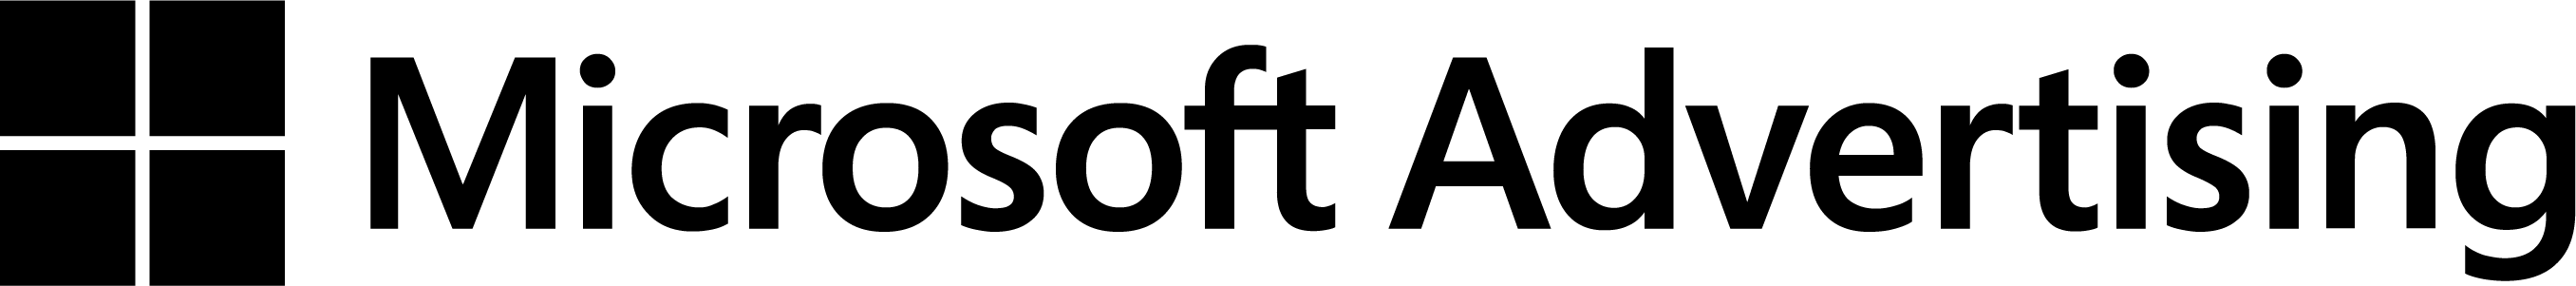 MS Advertising logo horiz black rgb